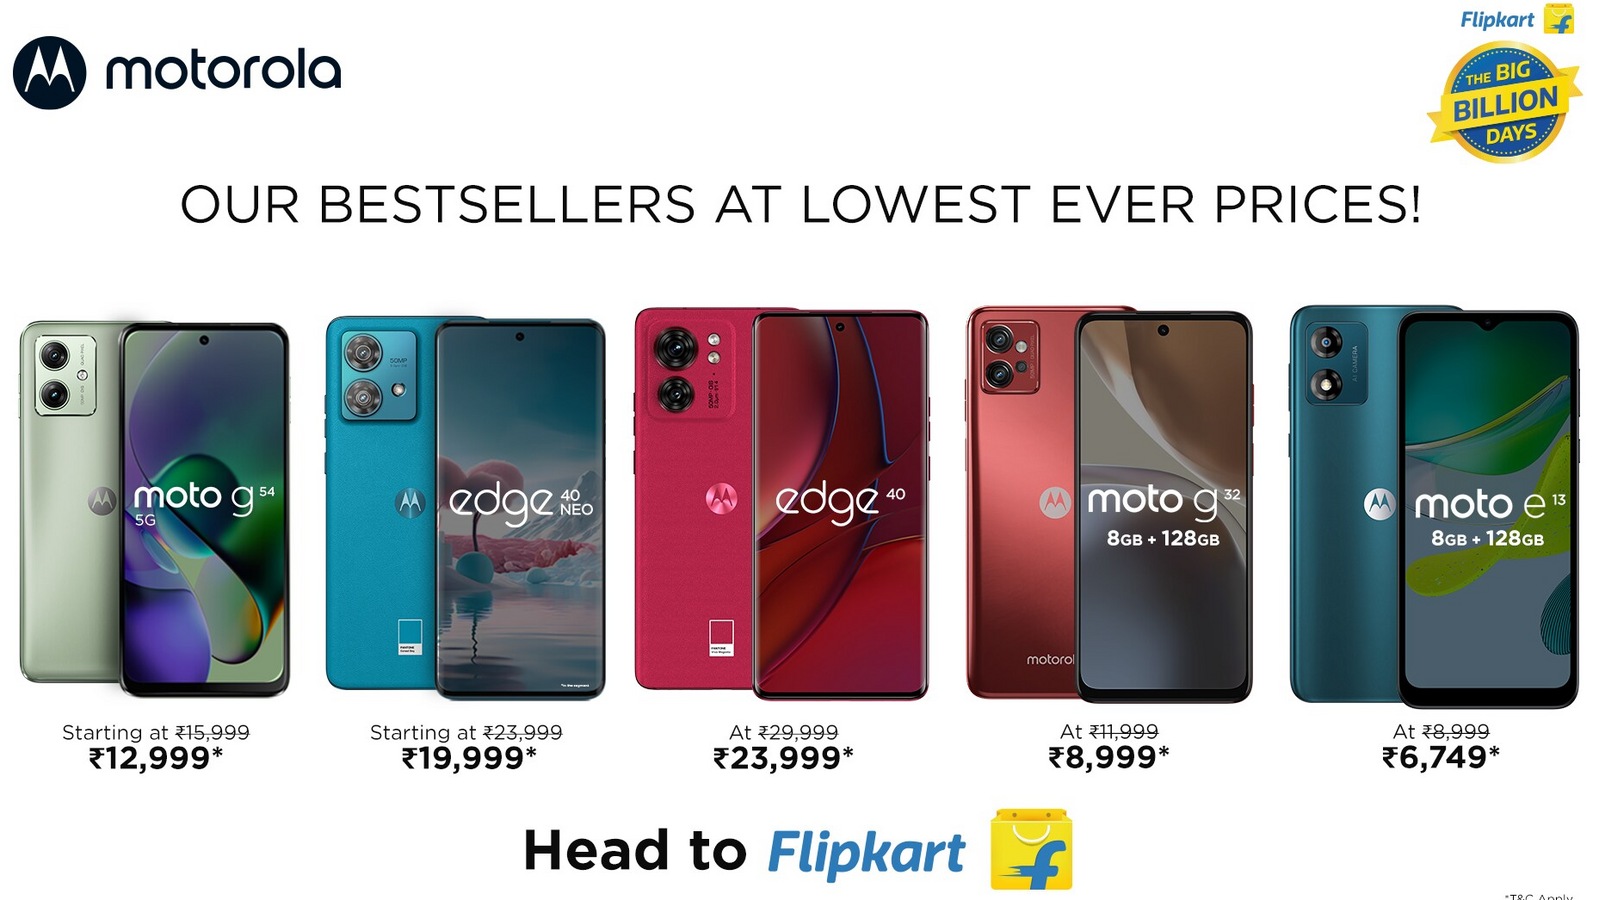 Flipkart Big Billion Days: Motorola’s Big Discounts on 5G smartphones and EnvisionX TVs